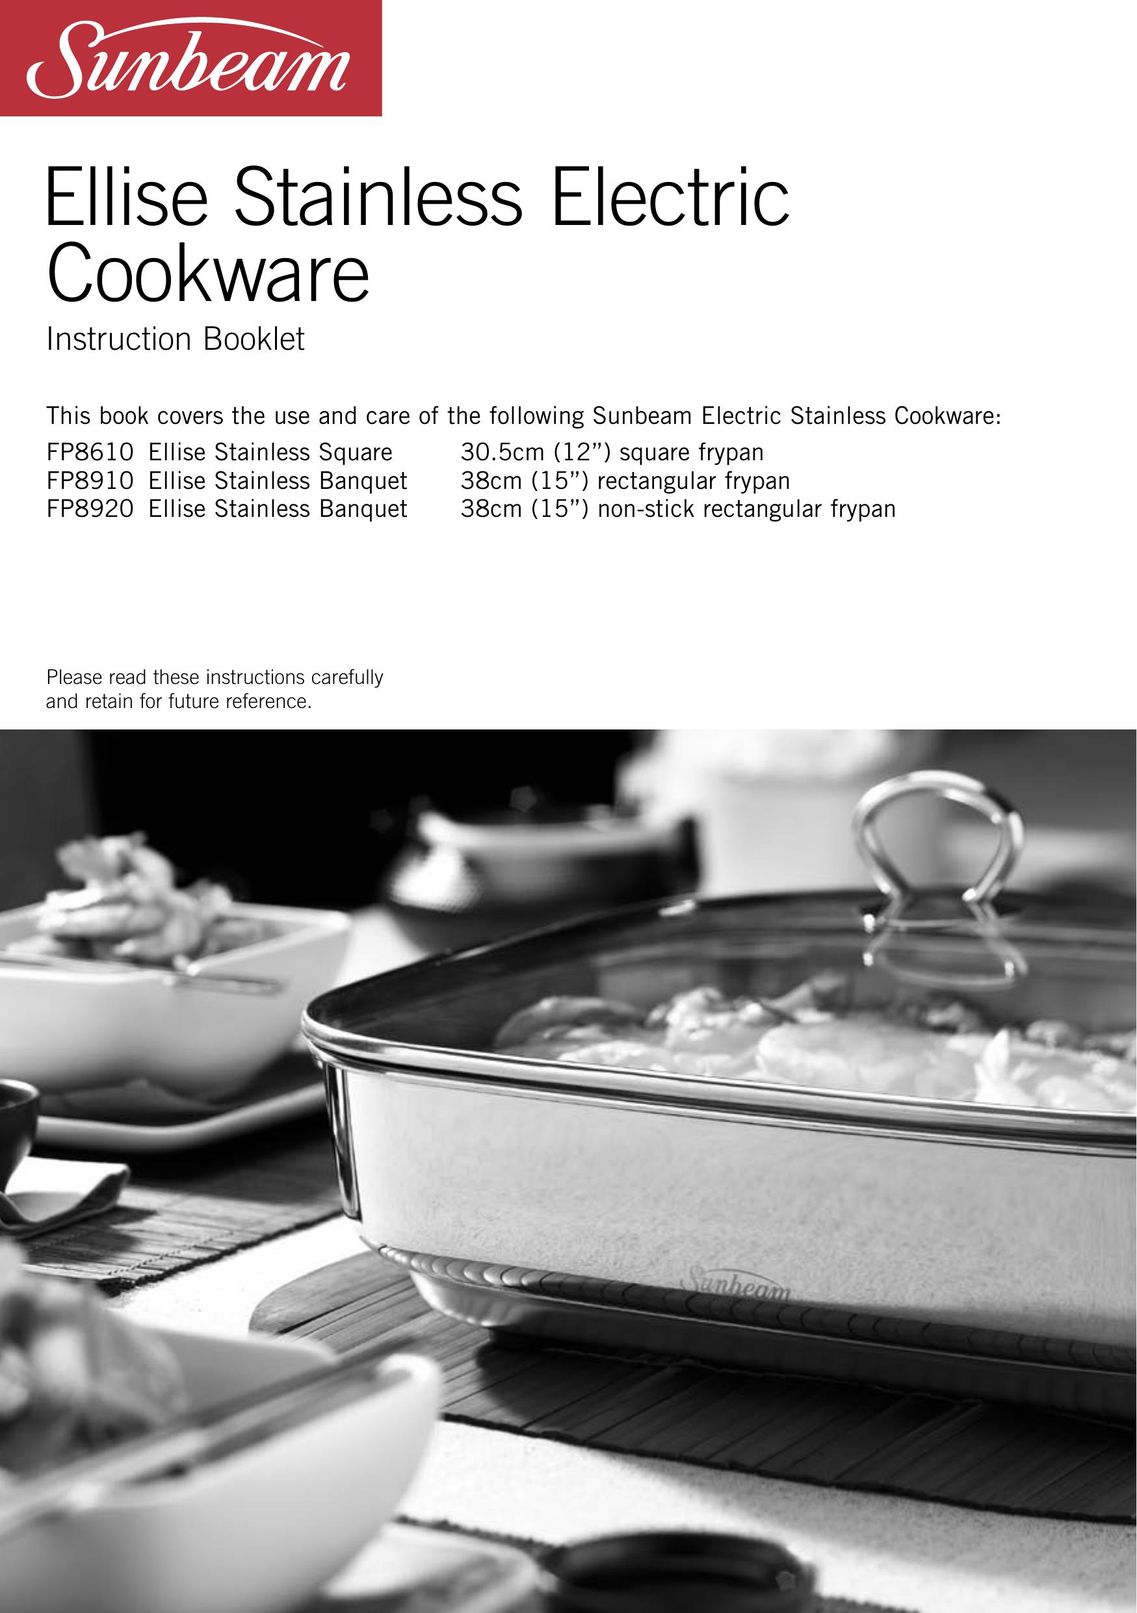 Sunbeam FP8910 Cookware User Manual